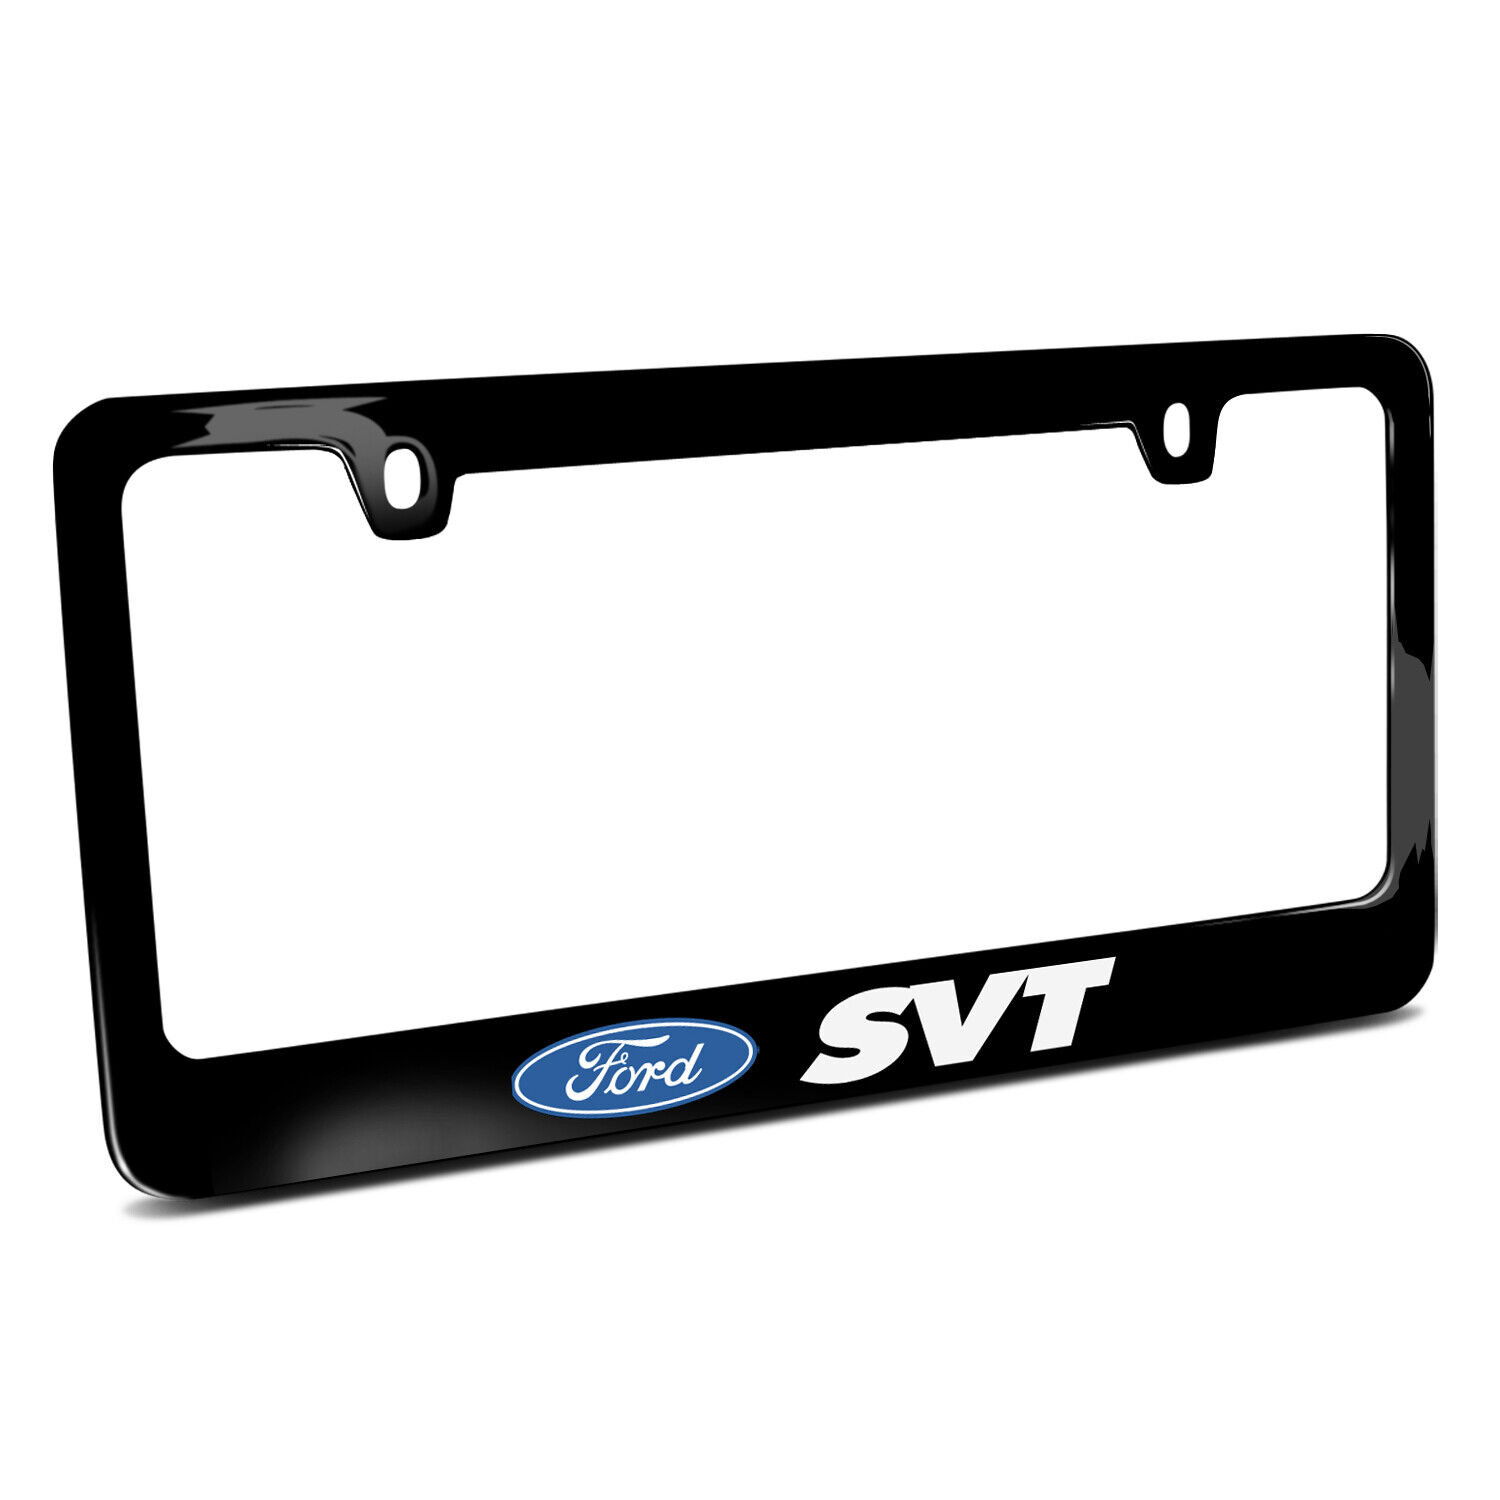 Ford SVT UV-LED Printed American-Made Black Metal License Plate Frame